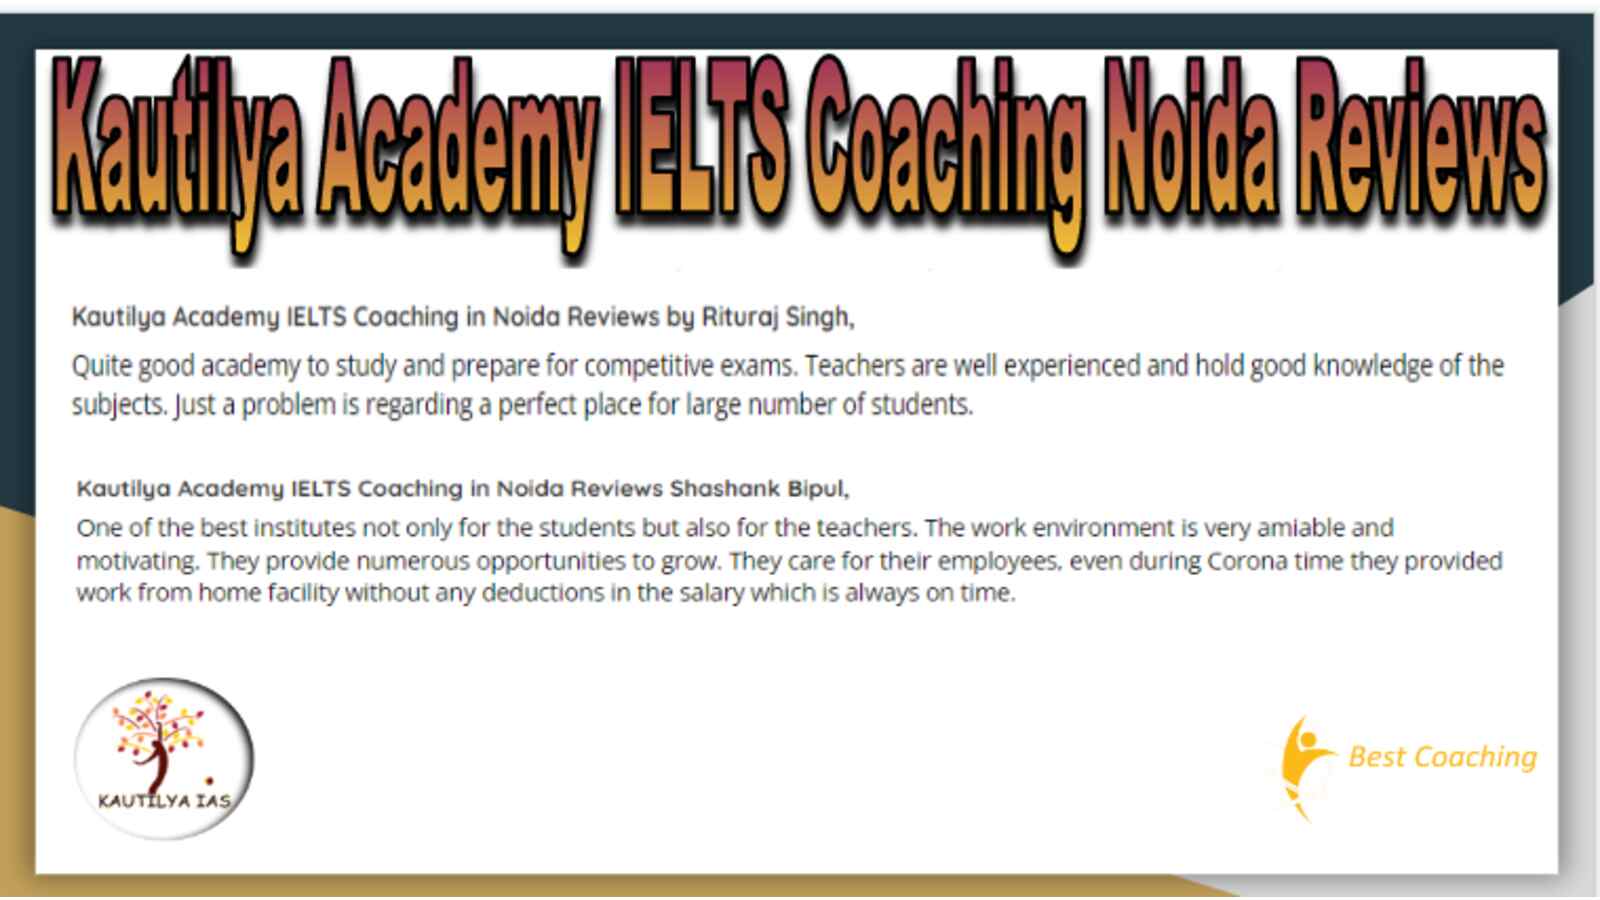 Kautilya Academy IELTS Coaching Noida Reviews